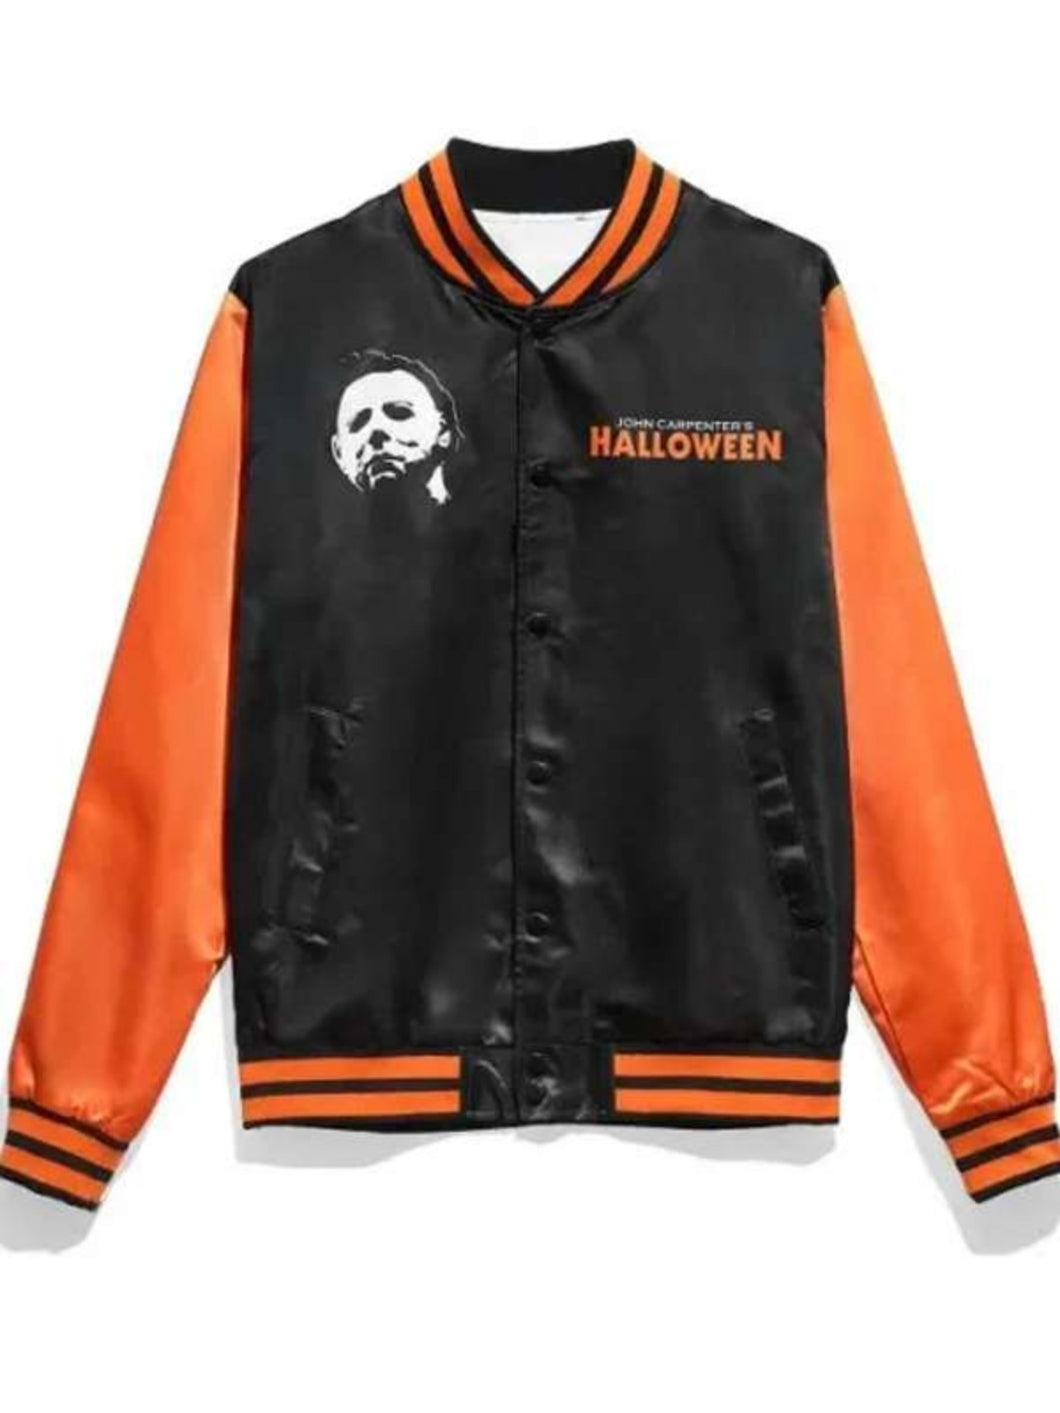 Halloween Men's Bomber Black and Orange Jacket